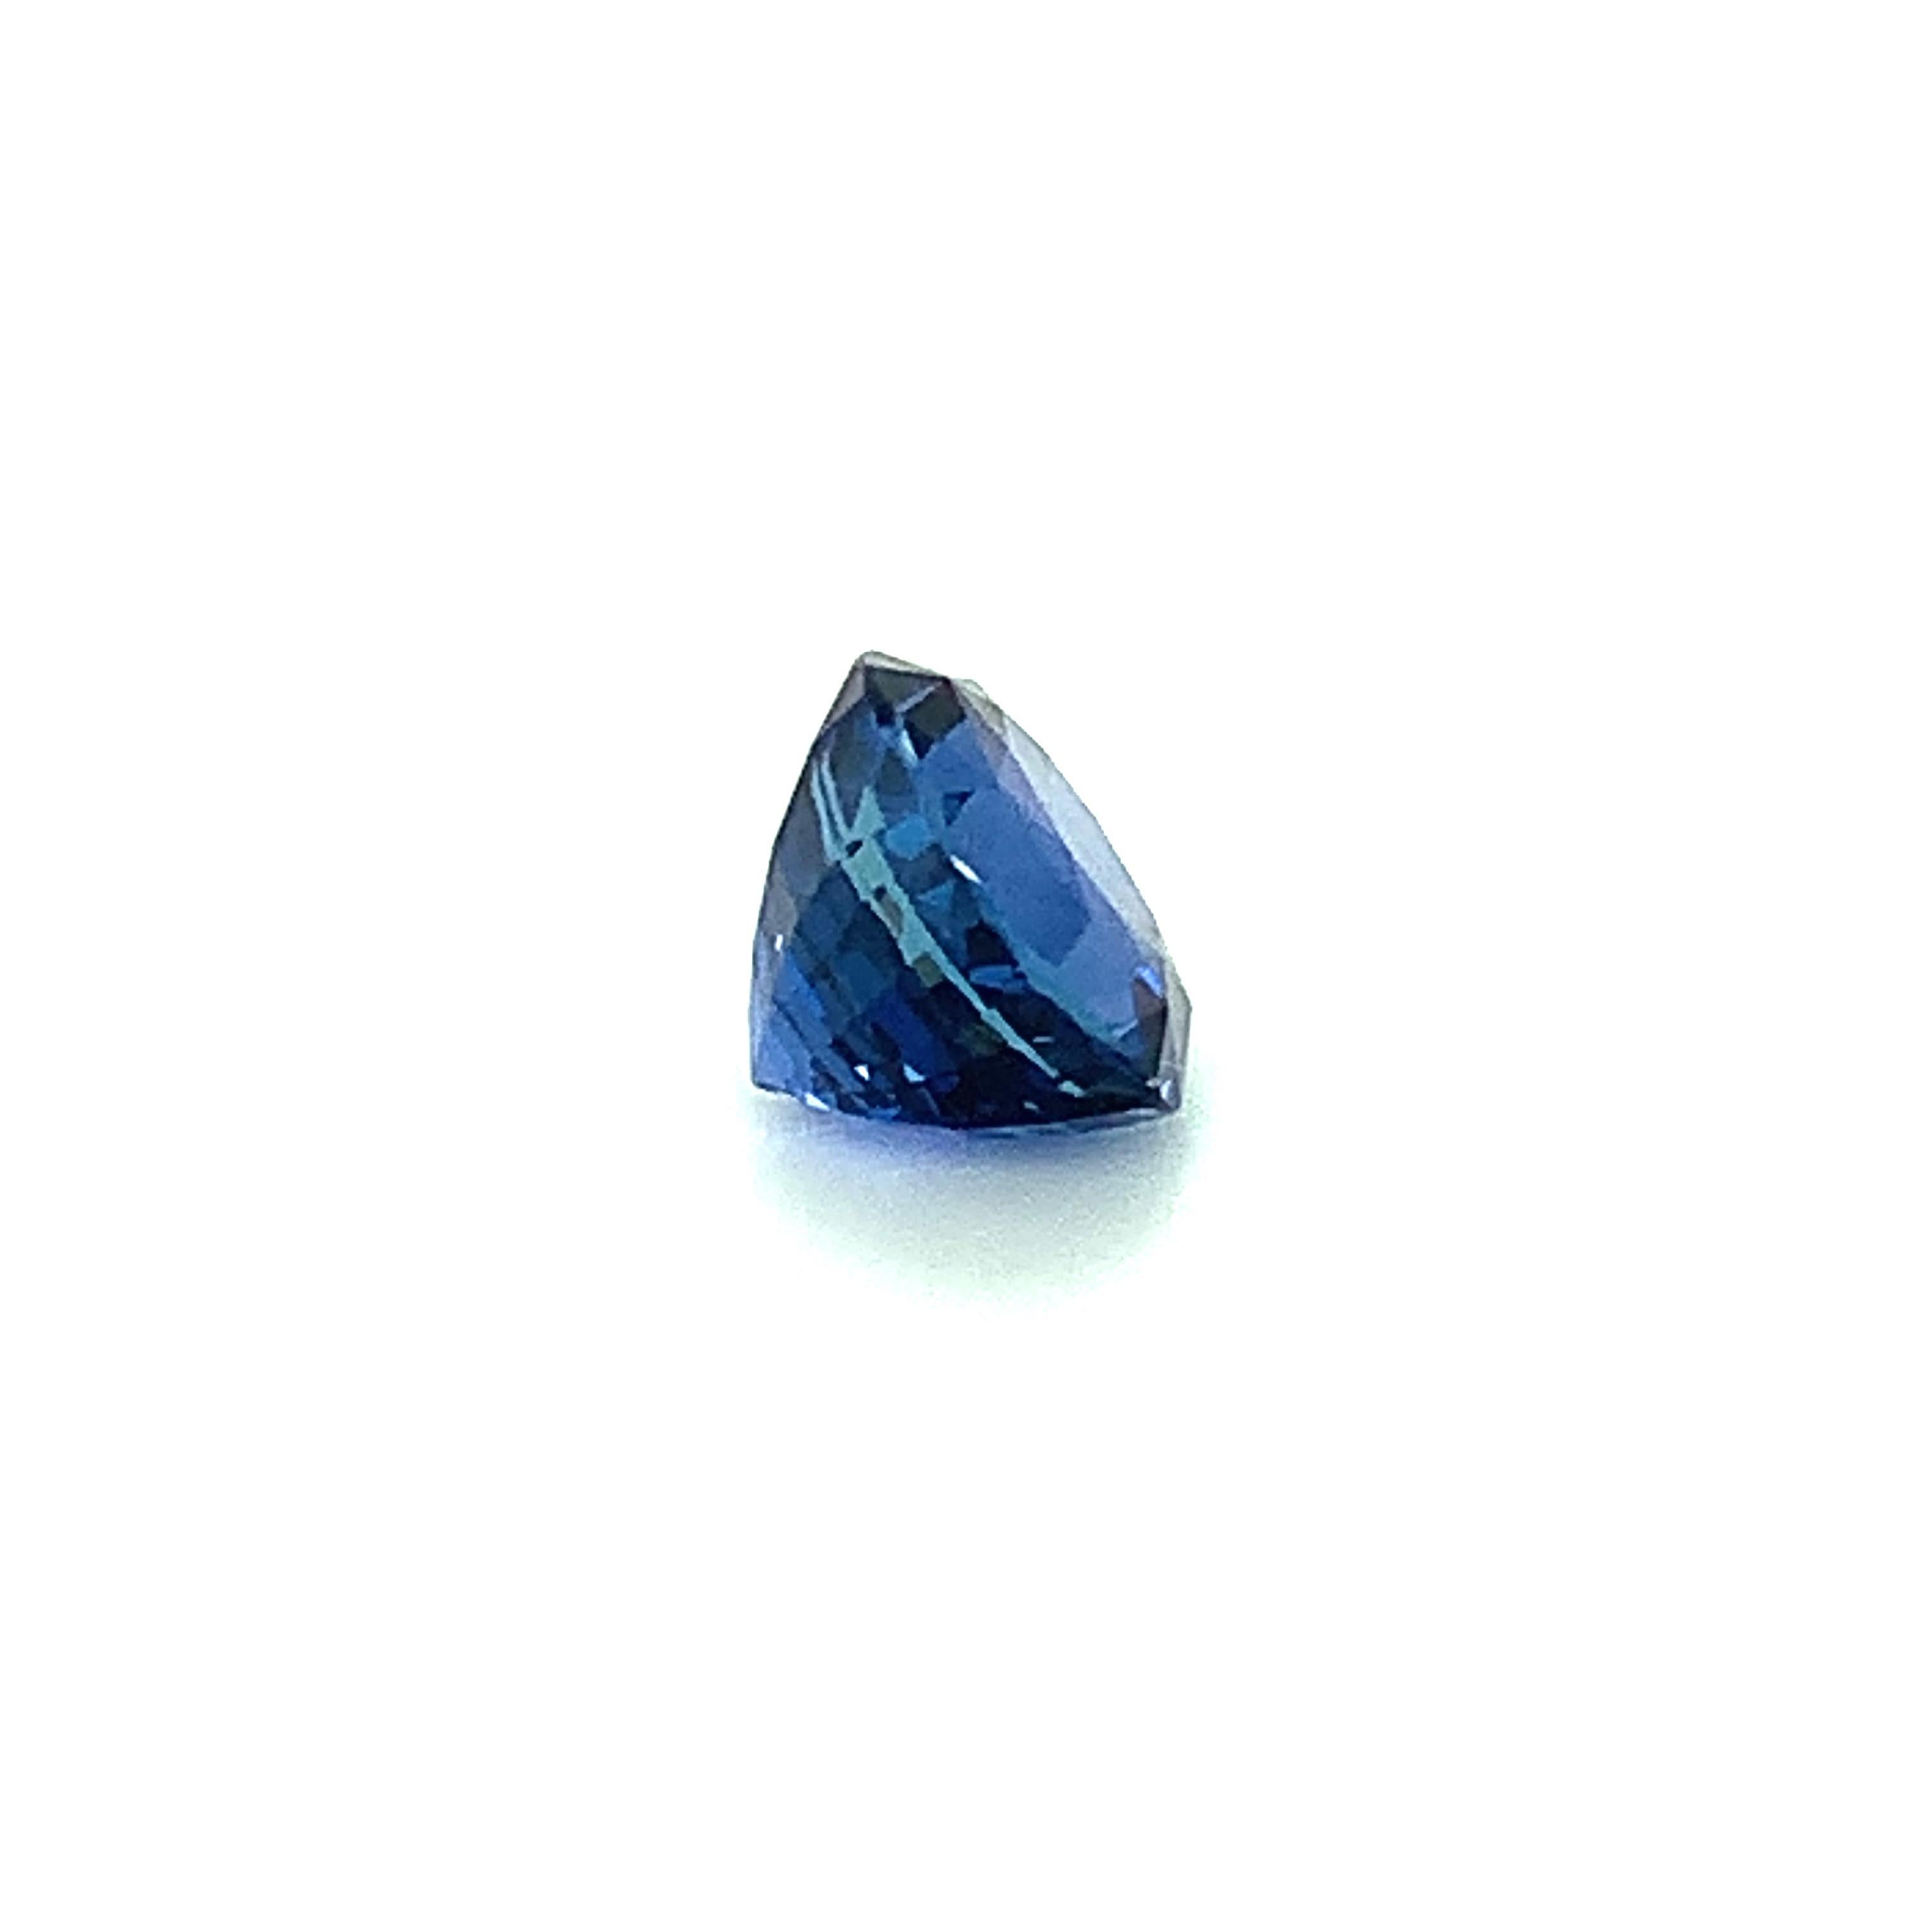 Unheated 3.32 Carat Ceylon Blue Sapphire, Unset Loose Gemstone, GIA Certified 1